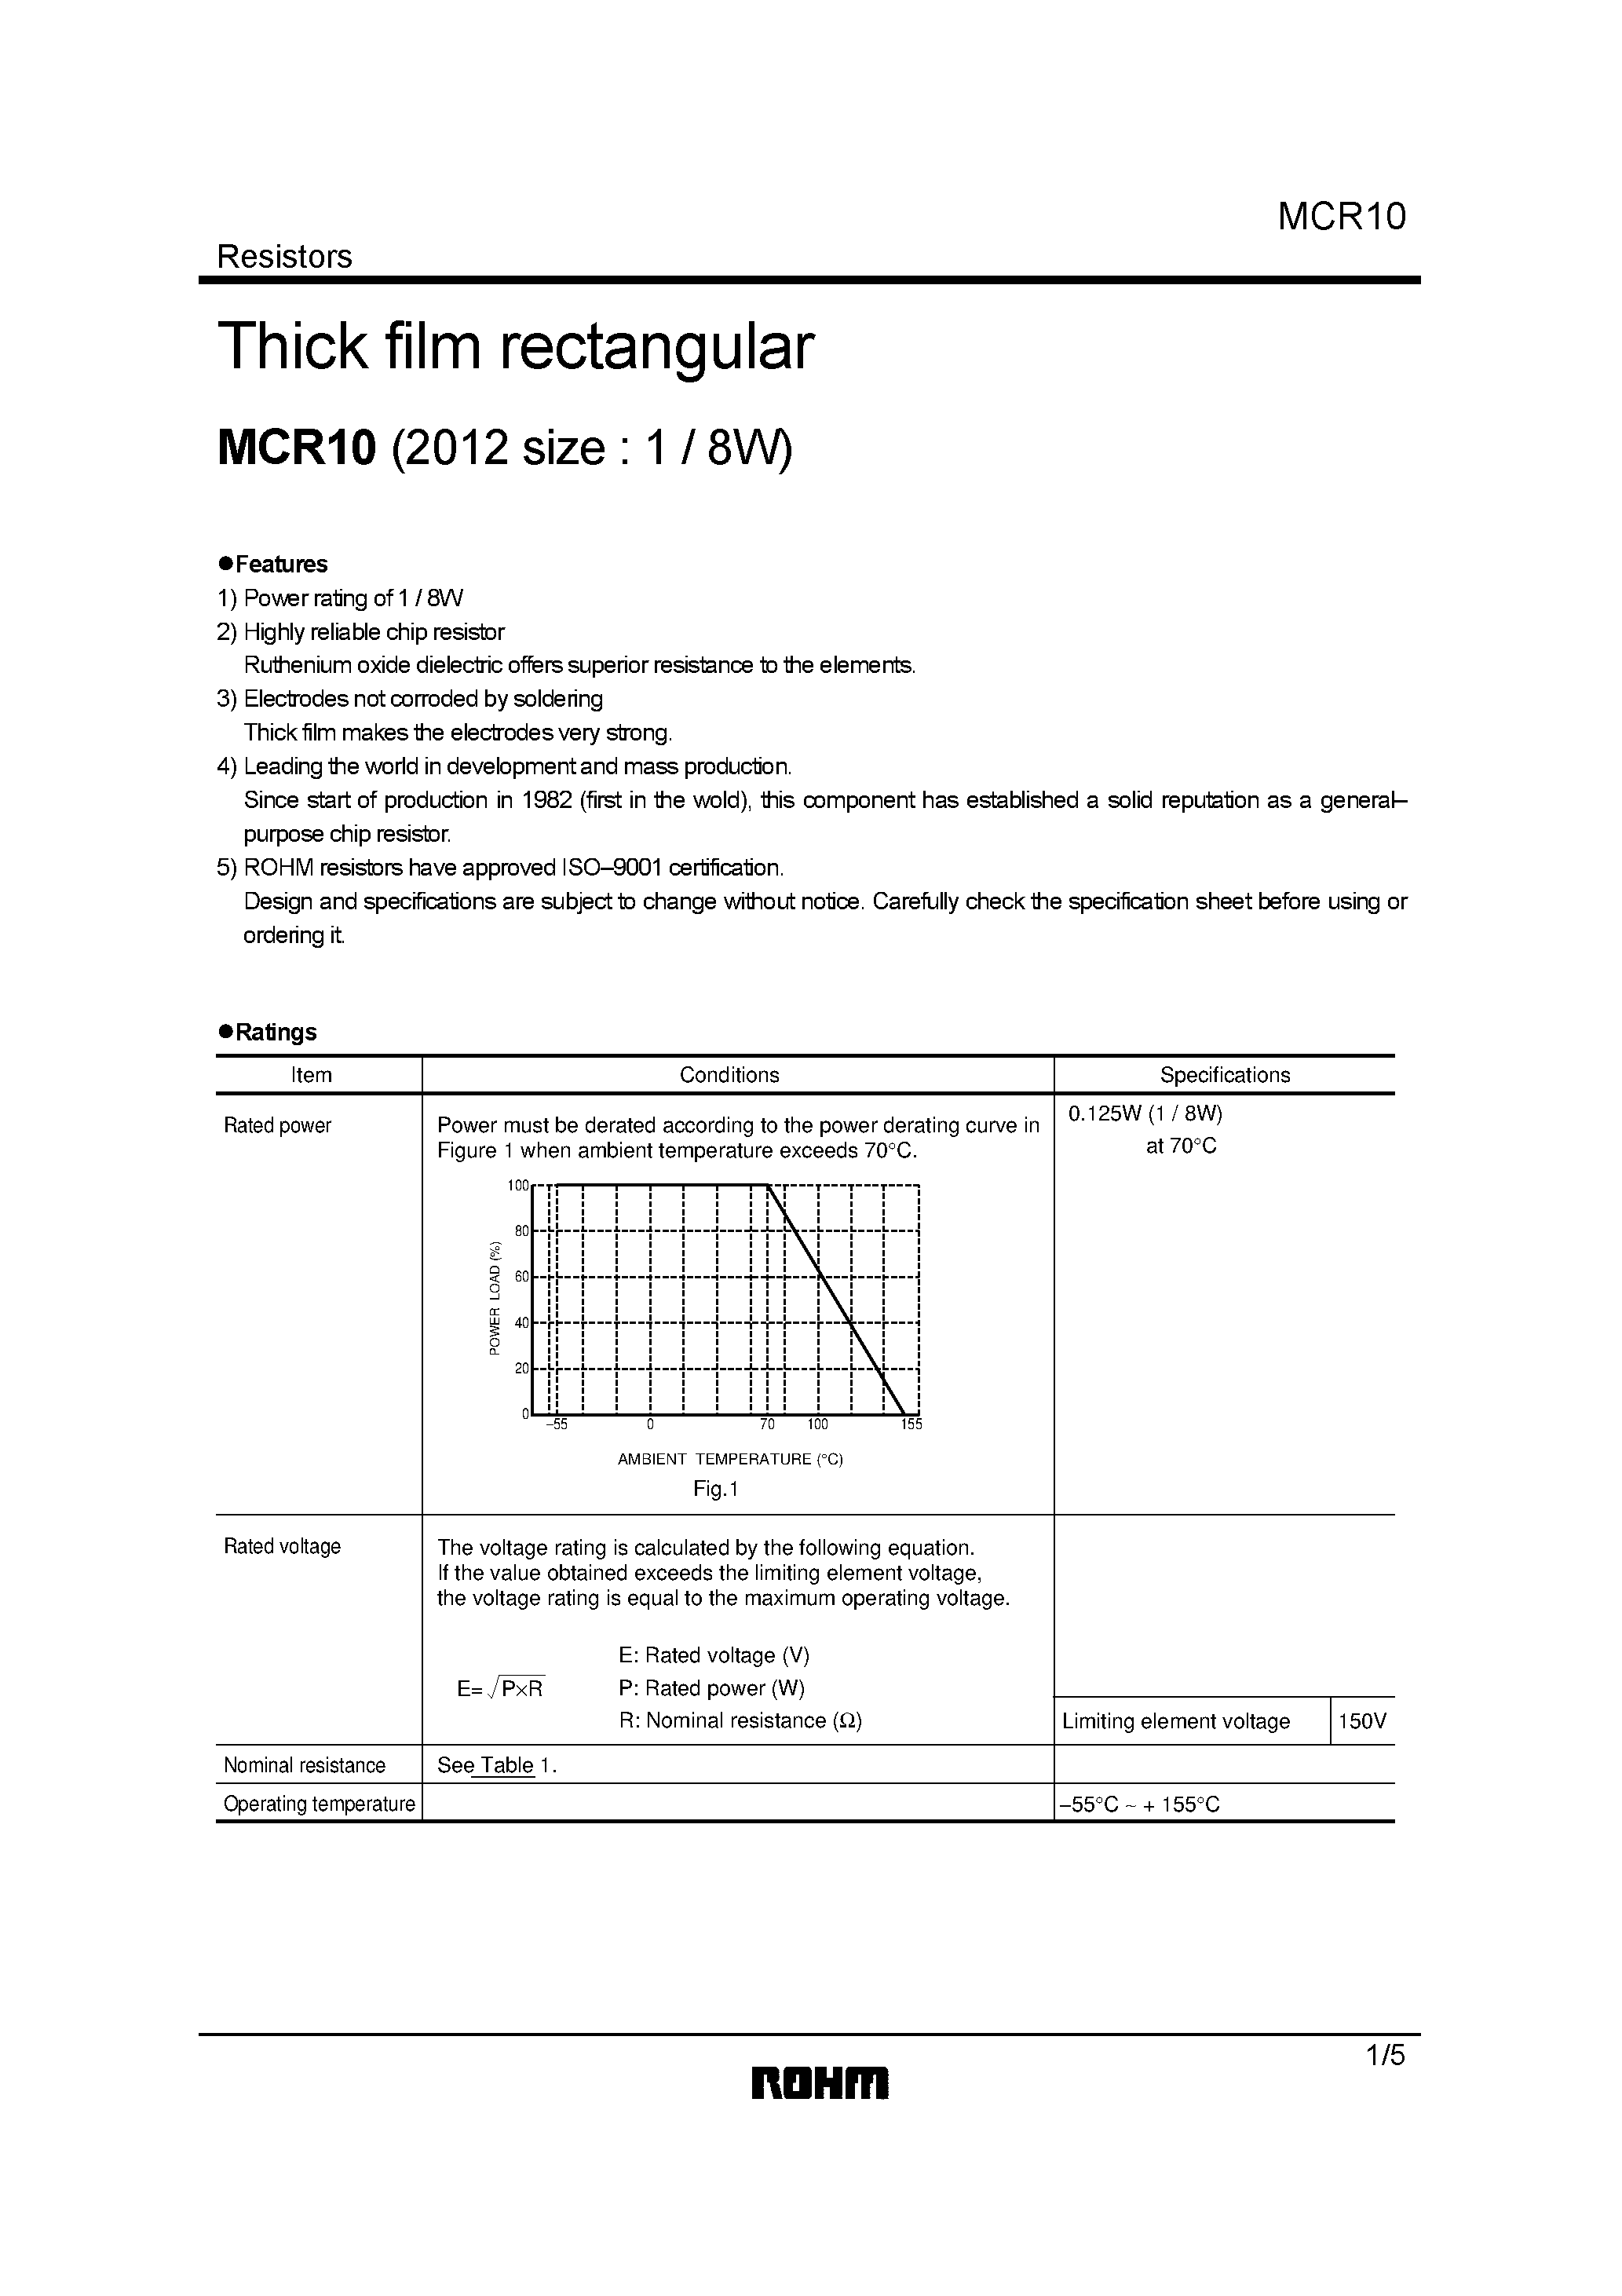 Datasheet MCR10 - Thick film rectangular page 1